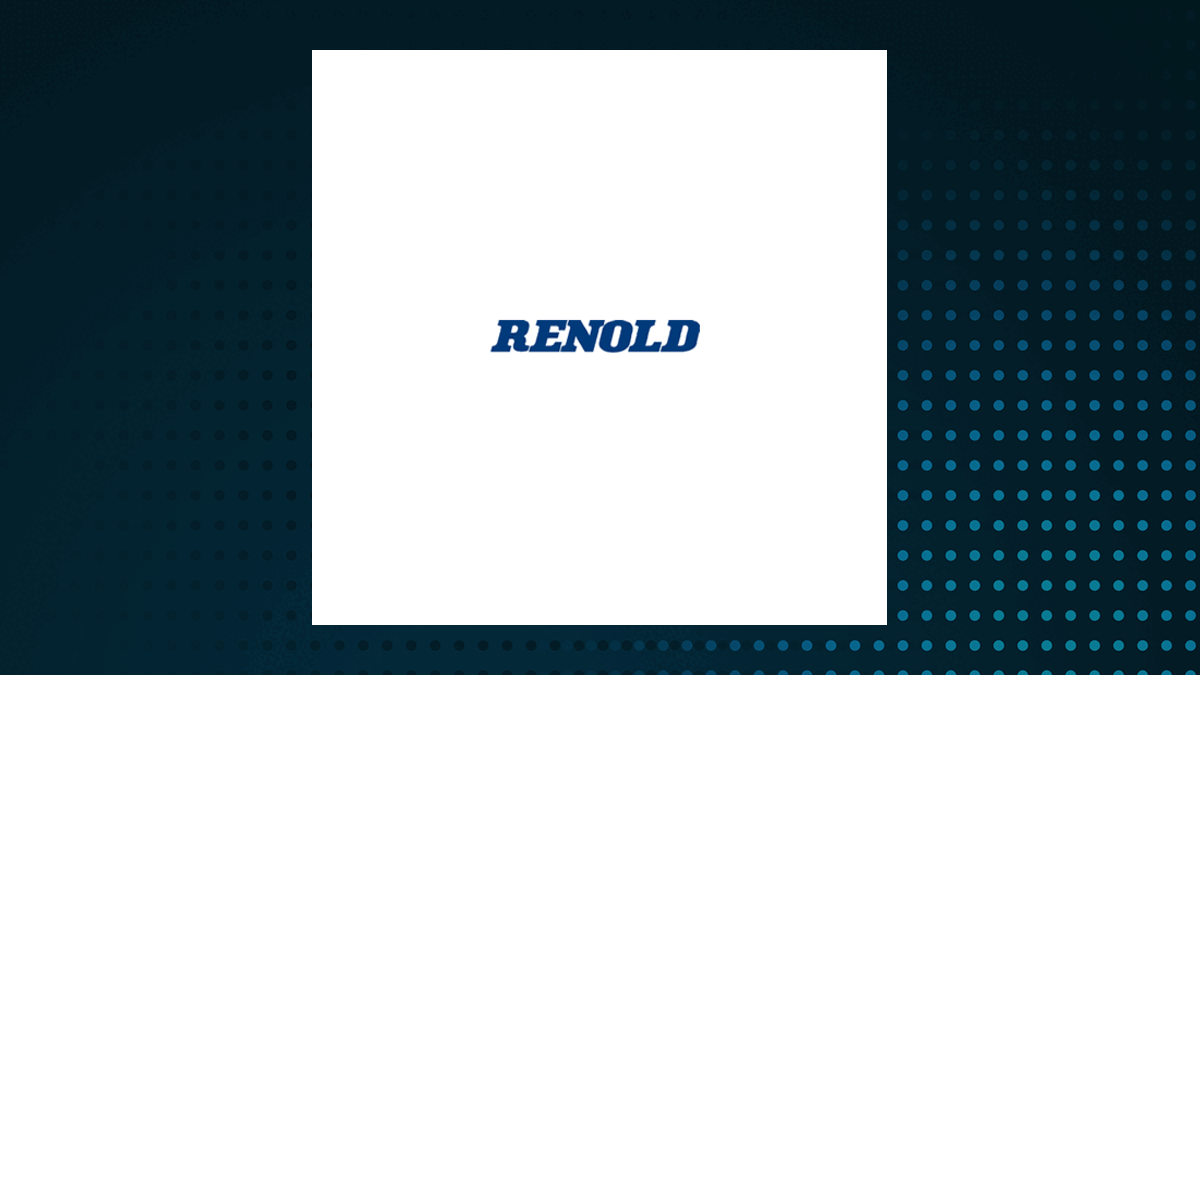 Renold logo